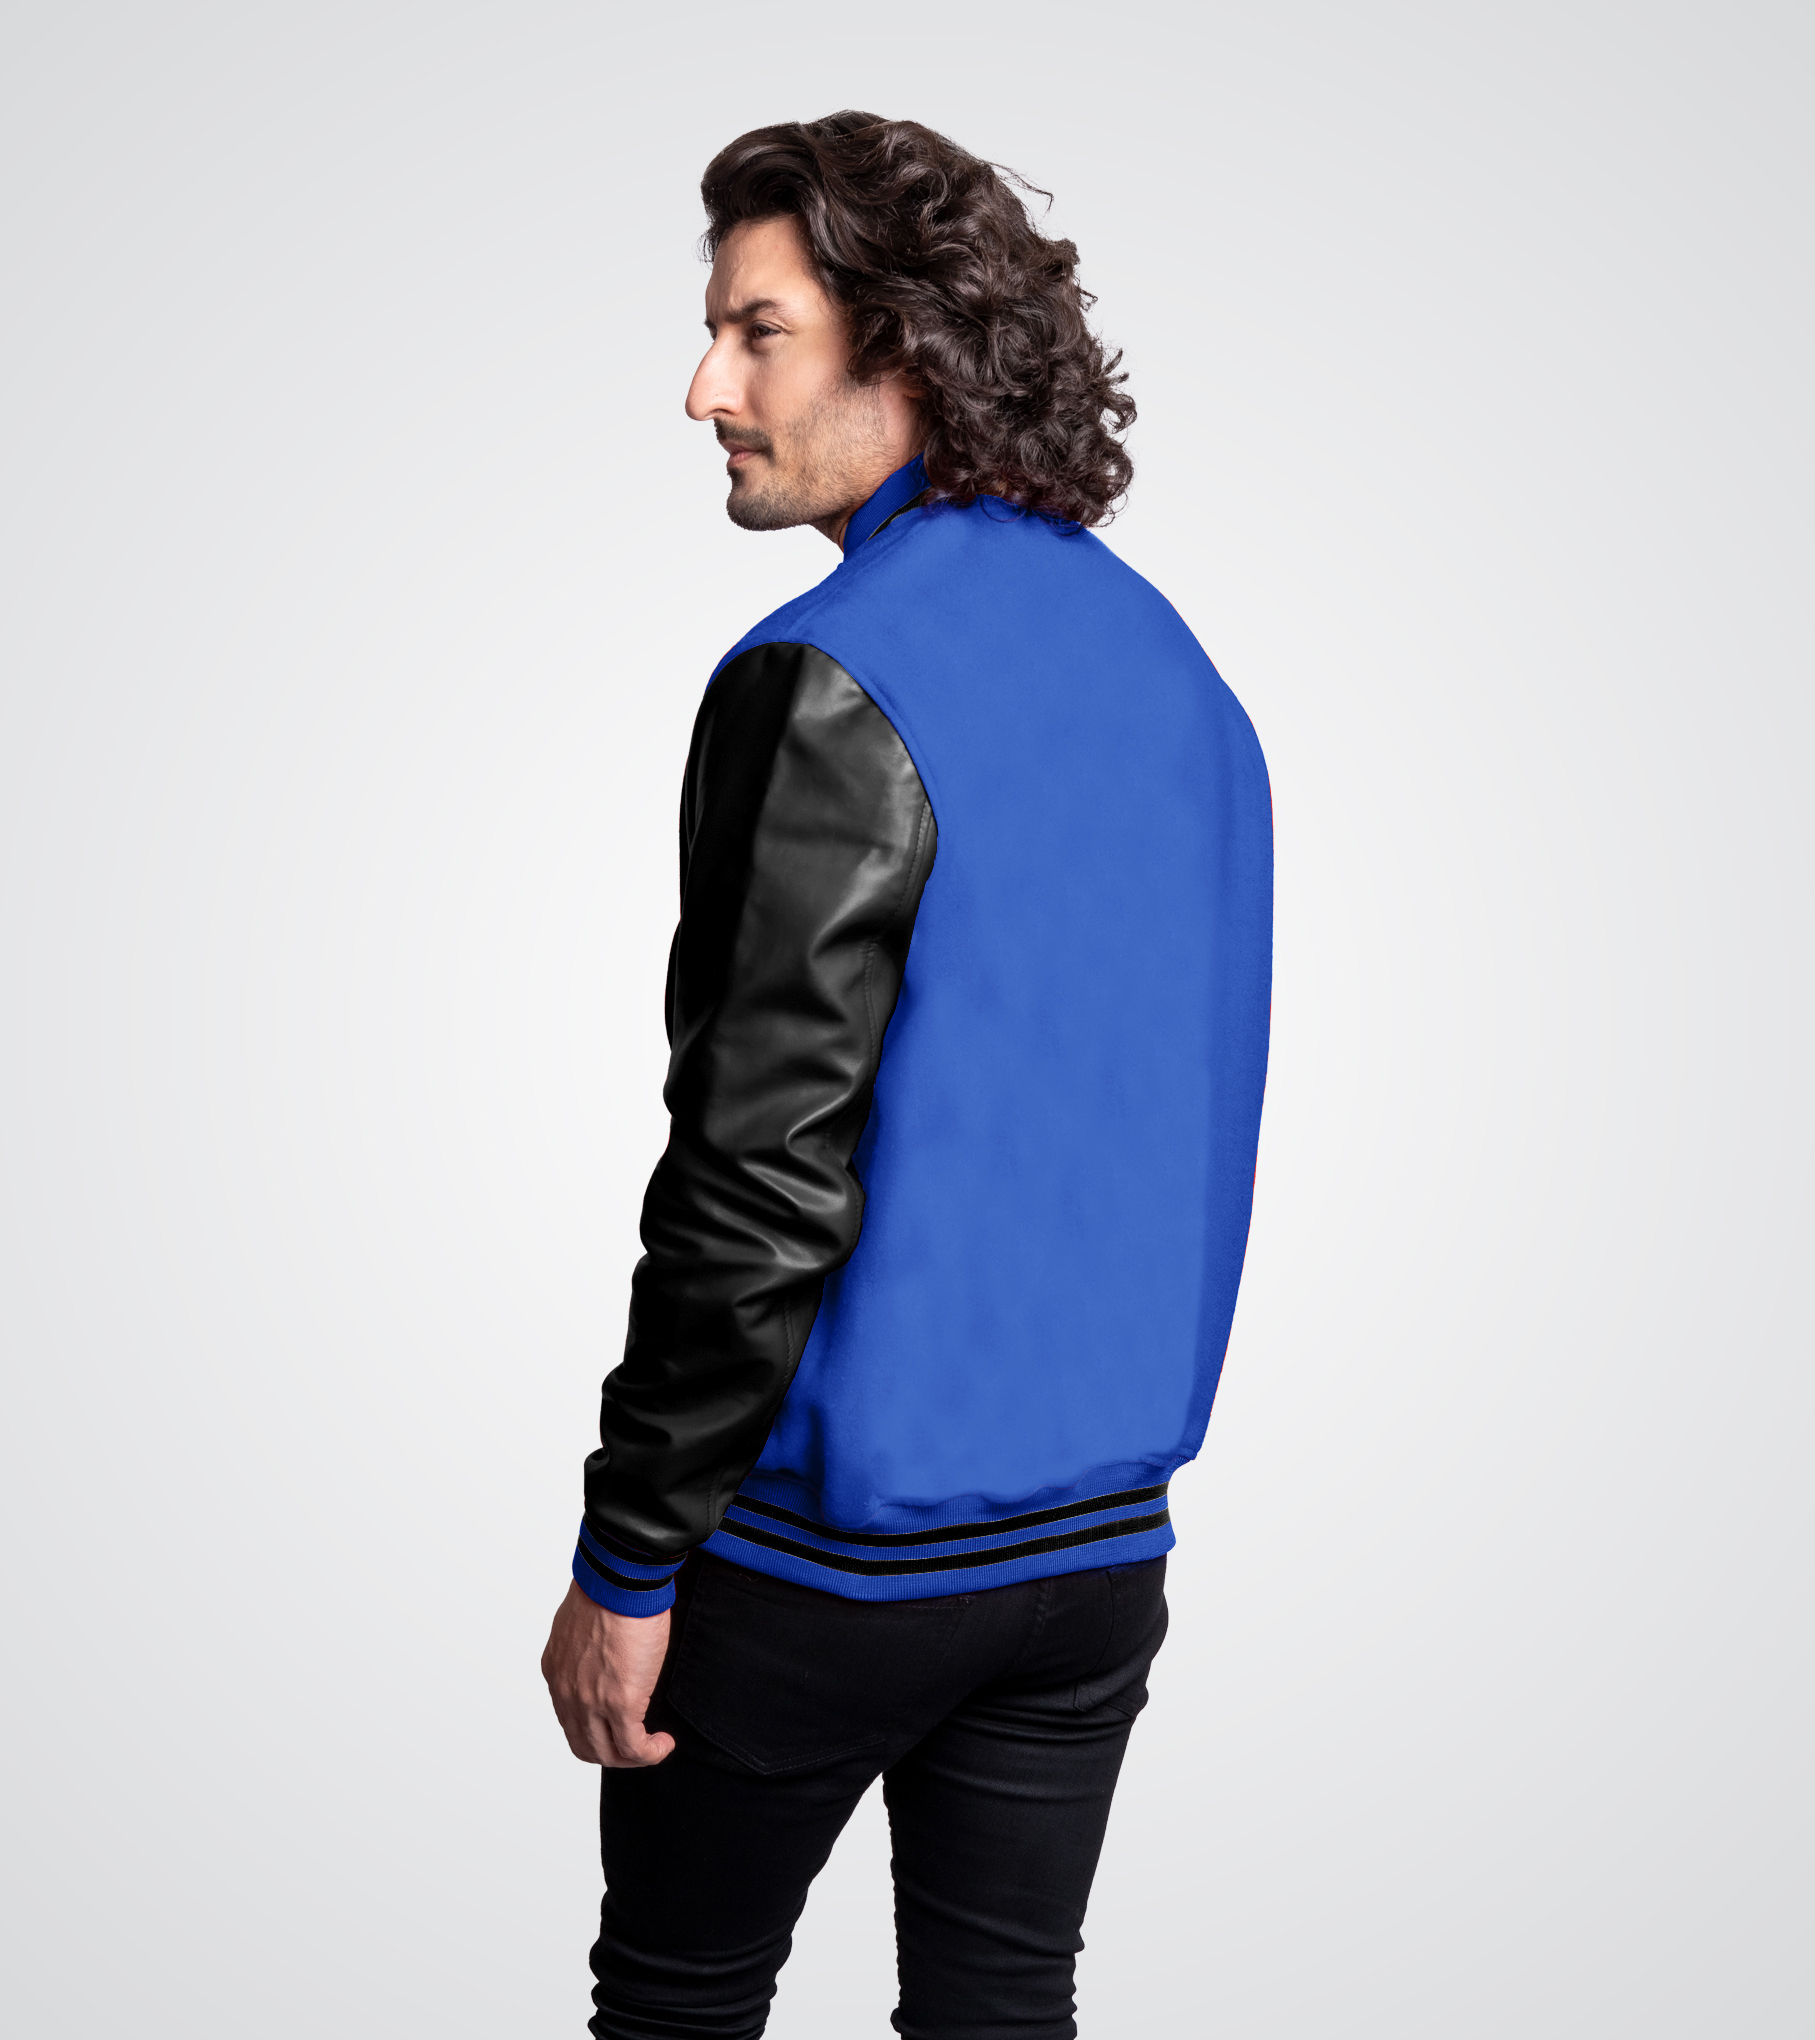 Royal blue wool body and Black leather sleeves Varsity Jacket